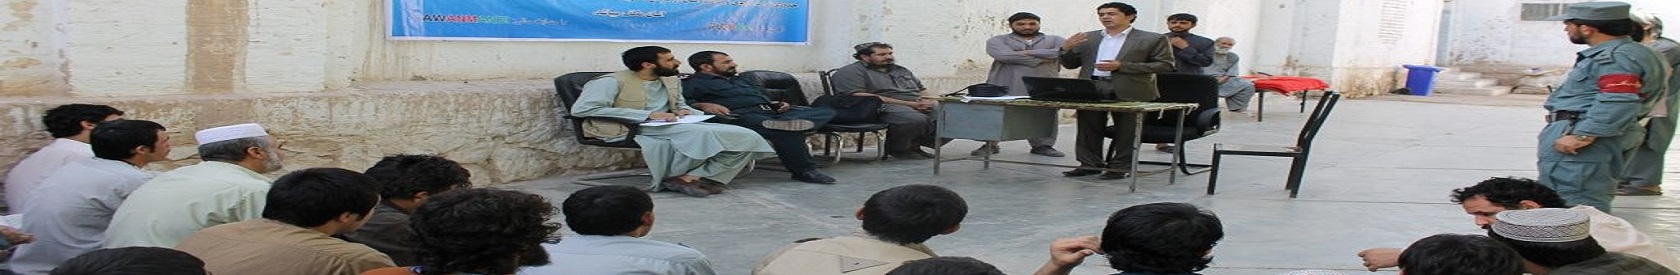 Legal training program in Herat’s men jail